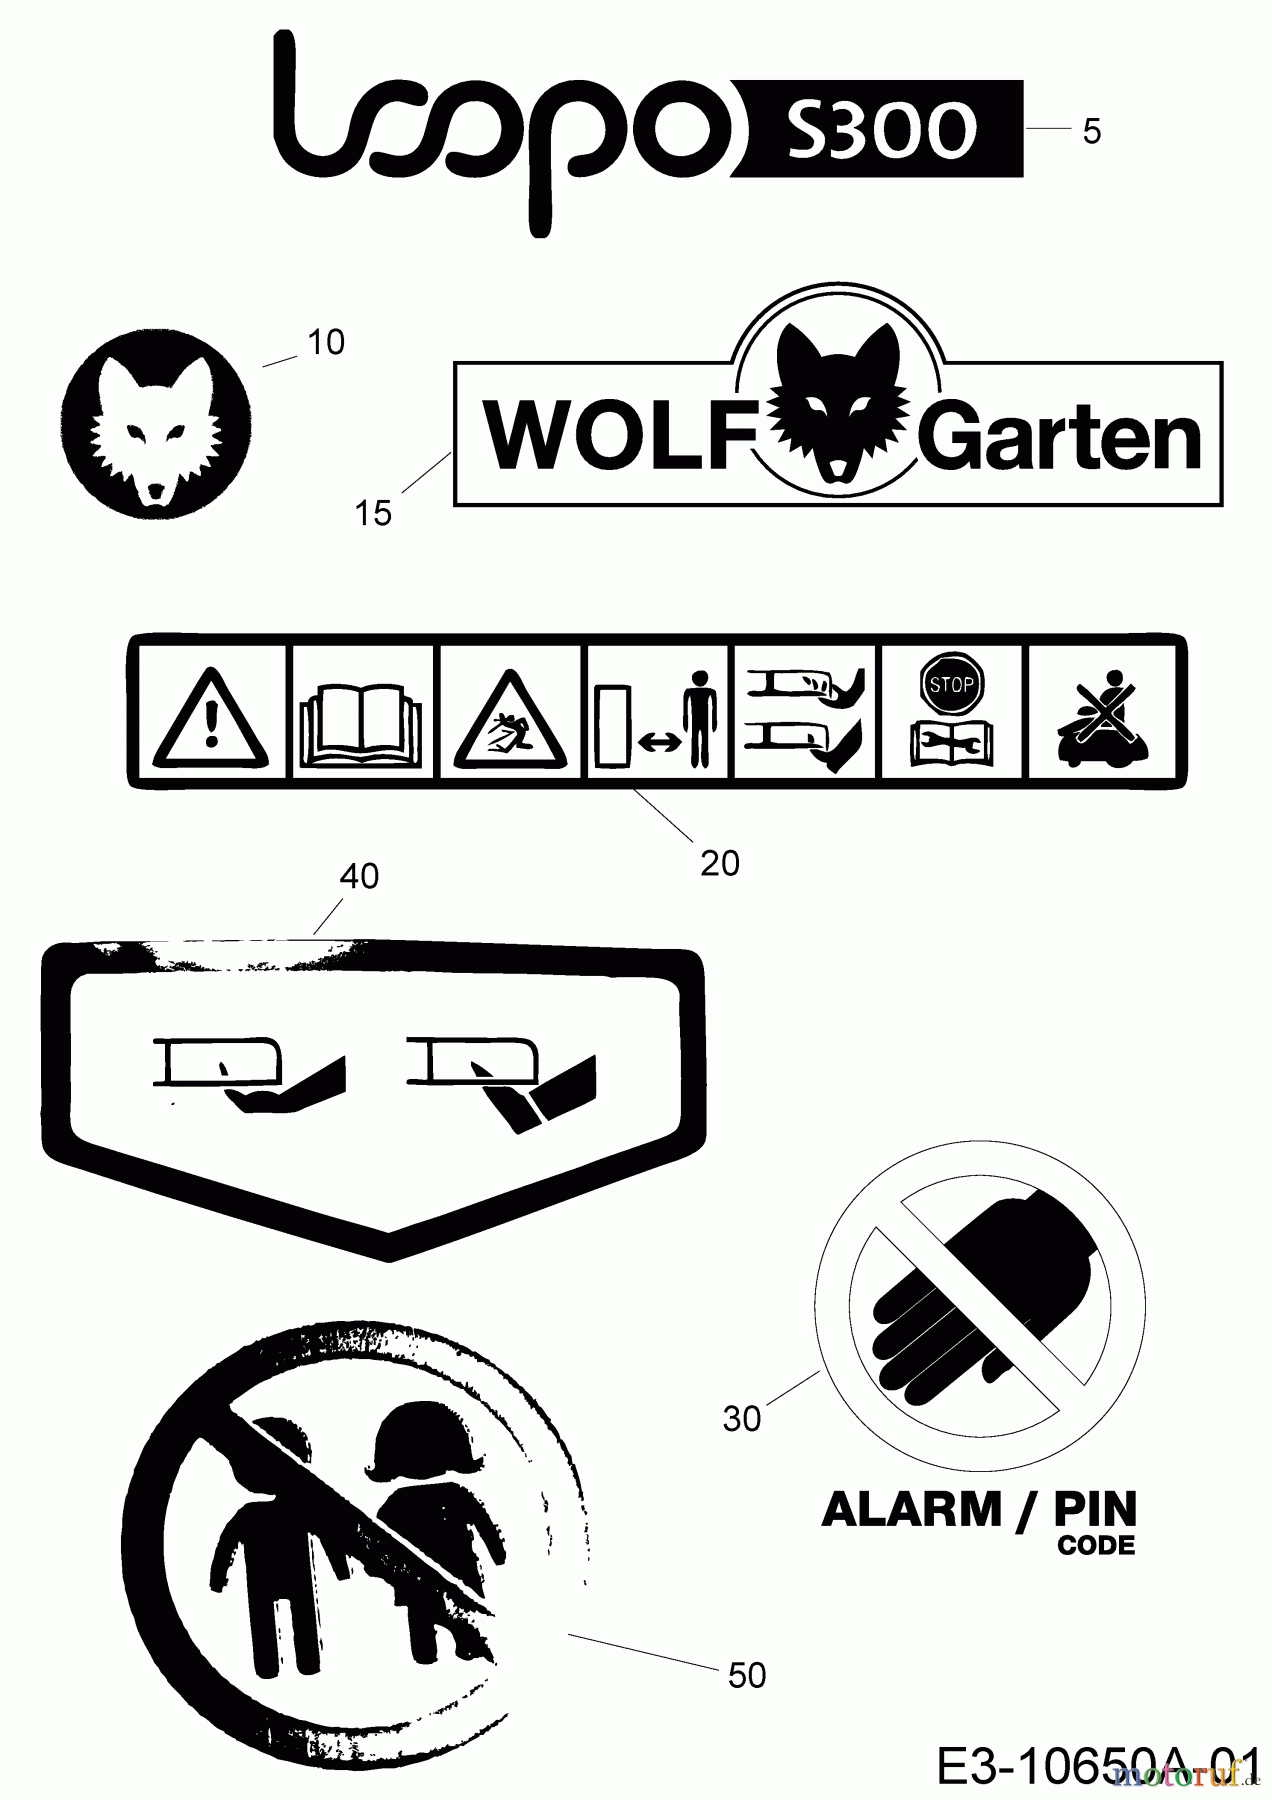  Wolf-Garten Robotic lawn mower Loopo S300 22AXDAHA650  (2018) Labels